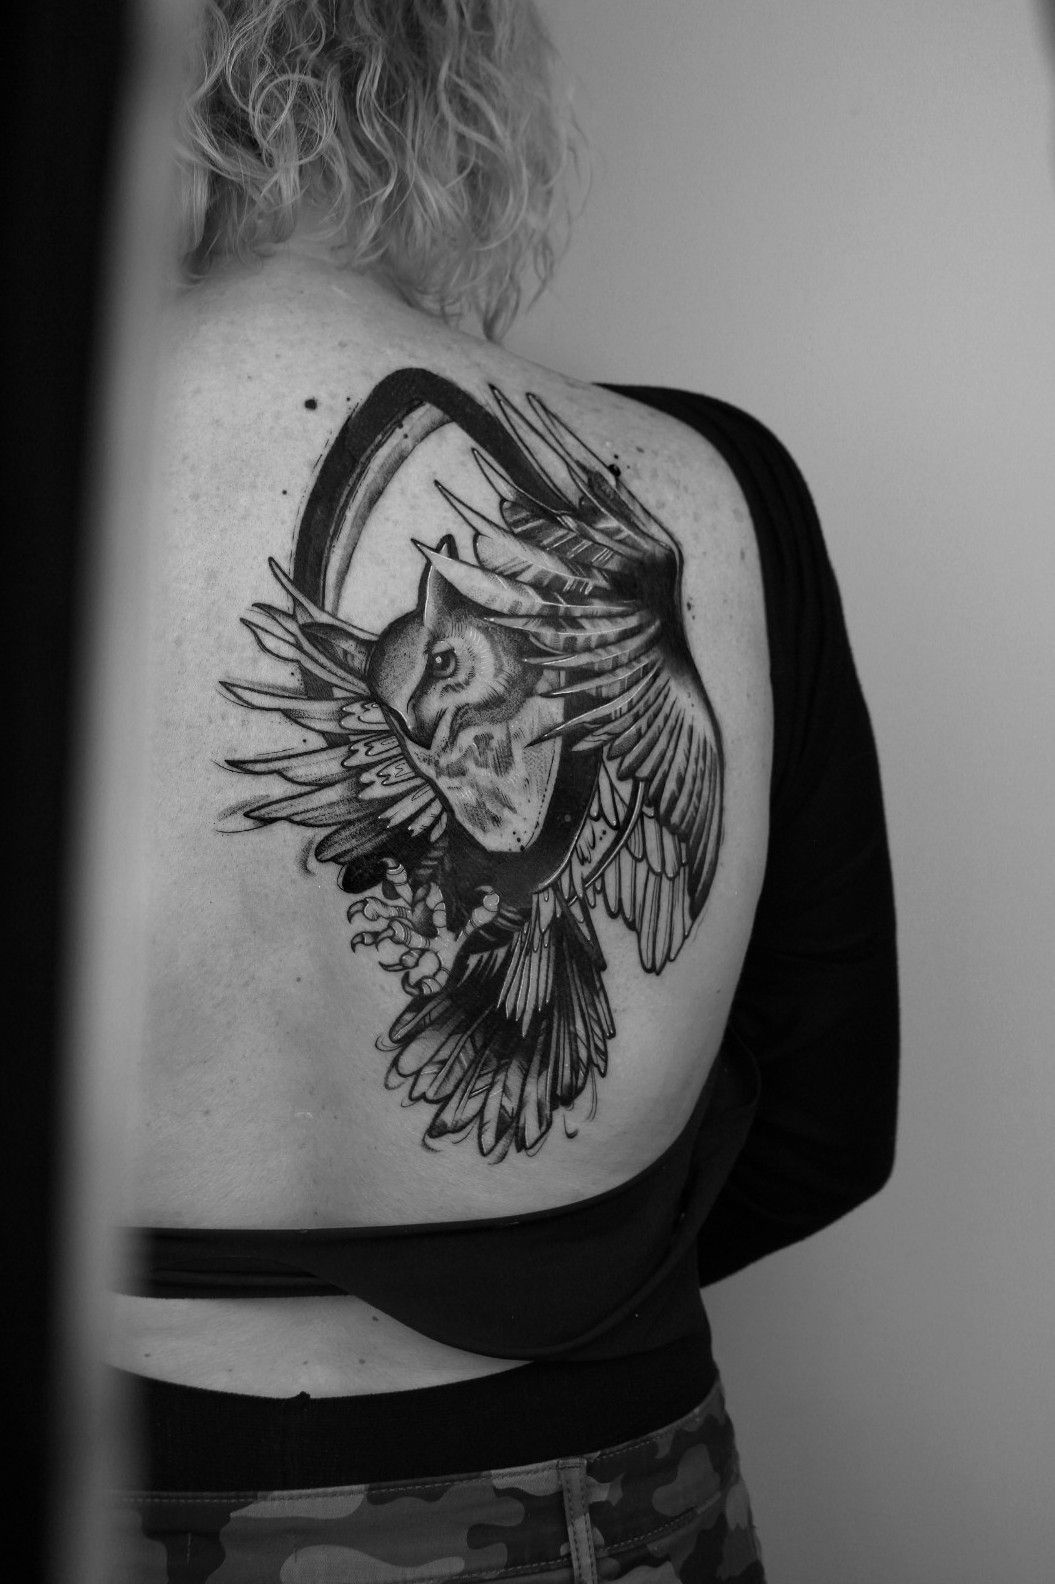 Asymmetrical Tattoo by DonRav3n on DeviantArt